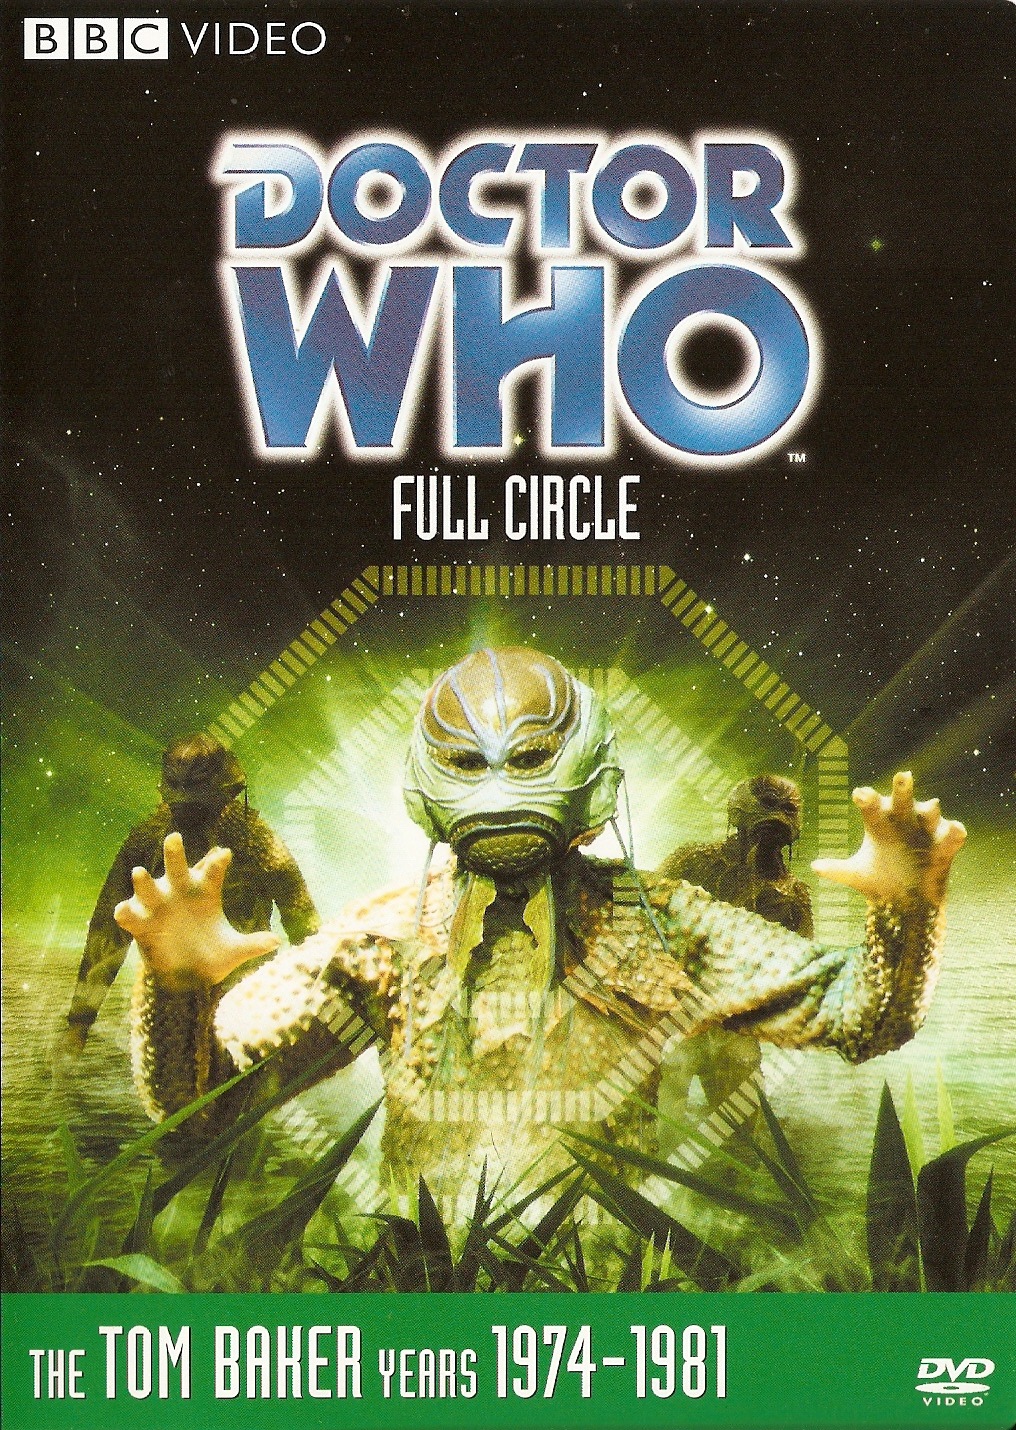 Full Circle Region 1 cover